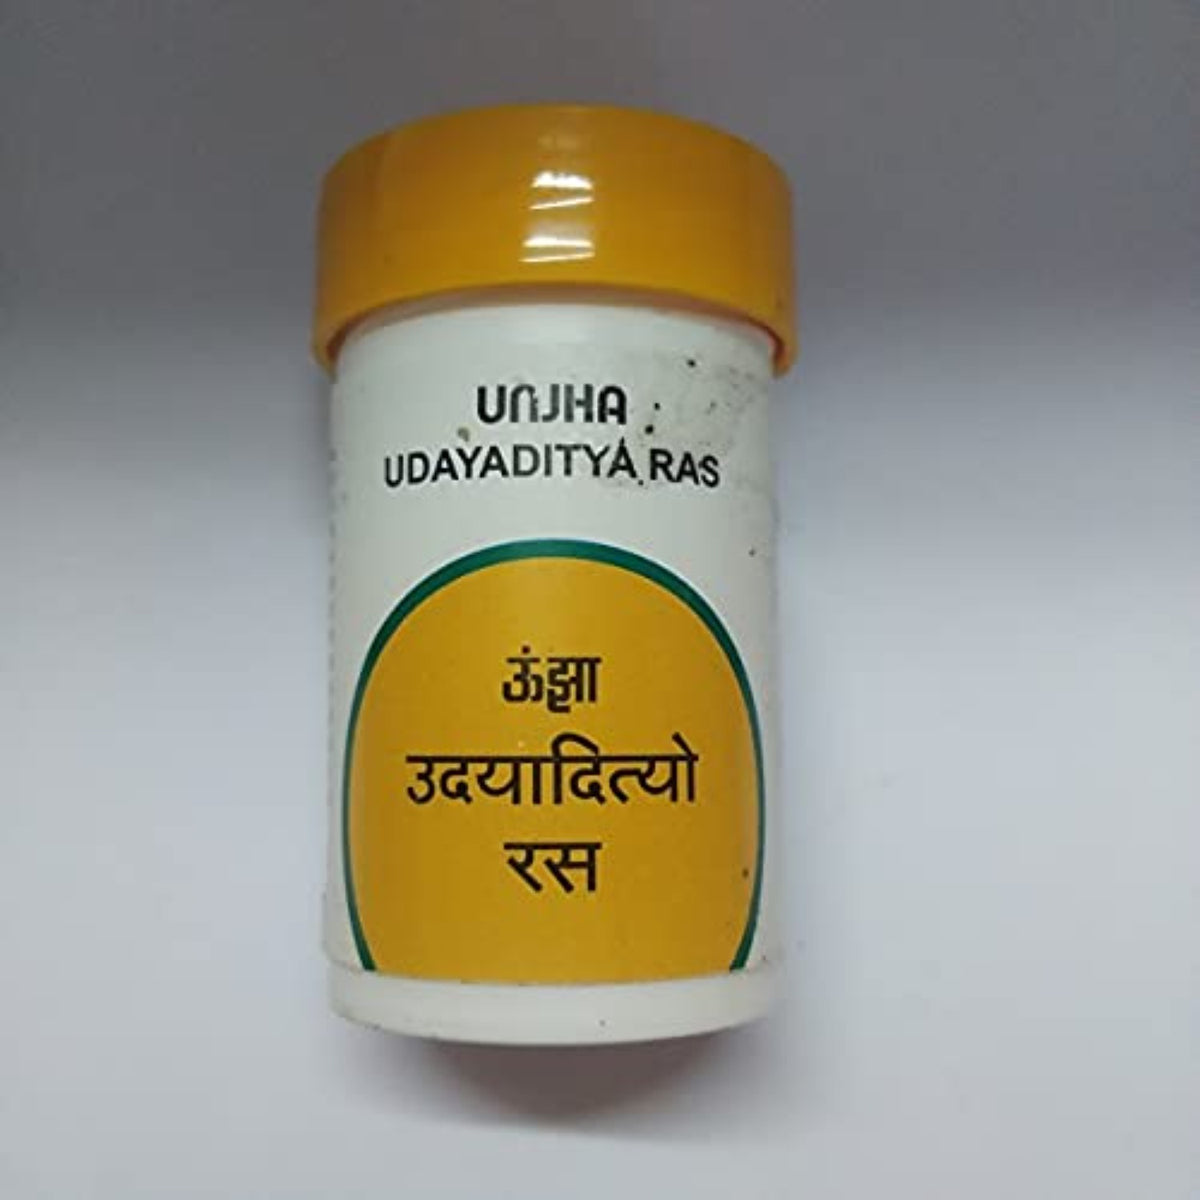 Unjha Ayurvedic Udayaditya Ras Skin Health Tablets